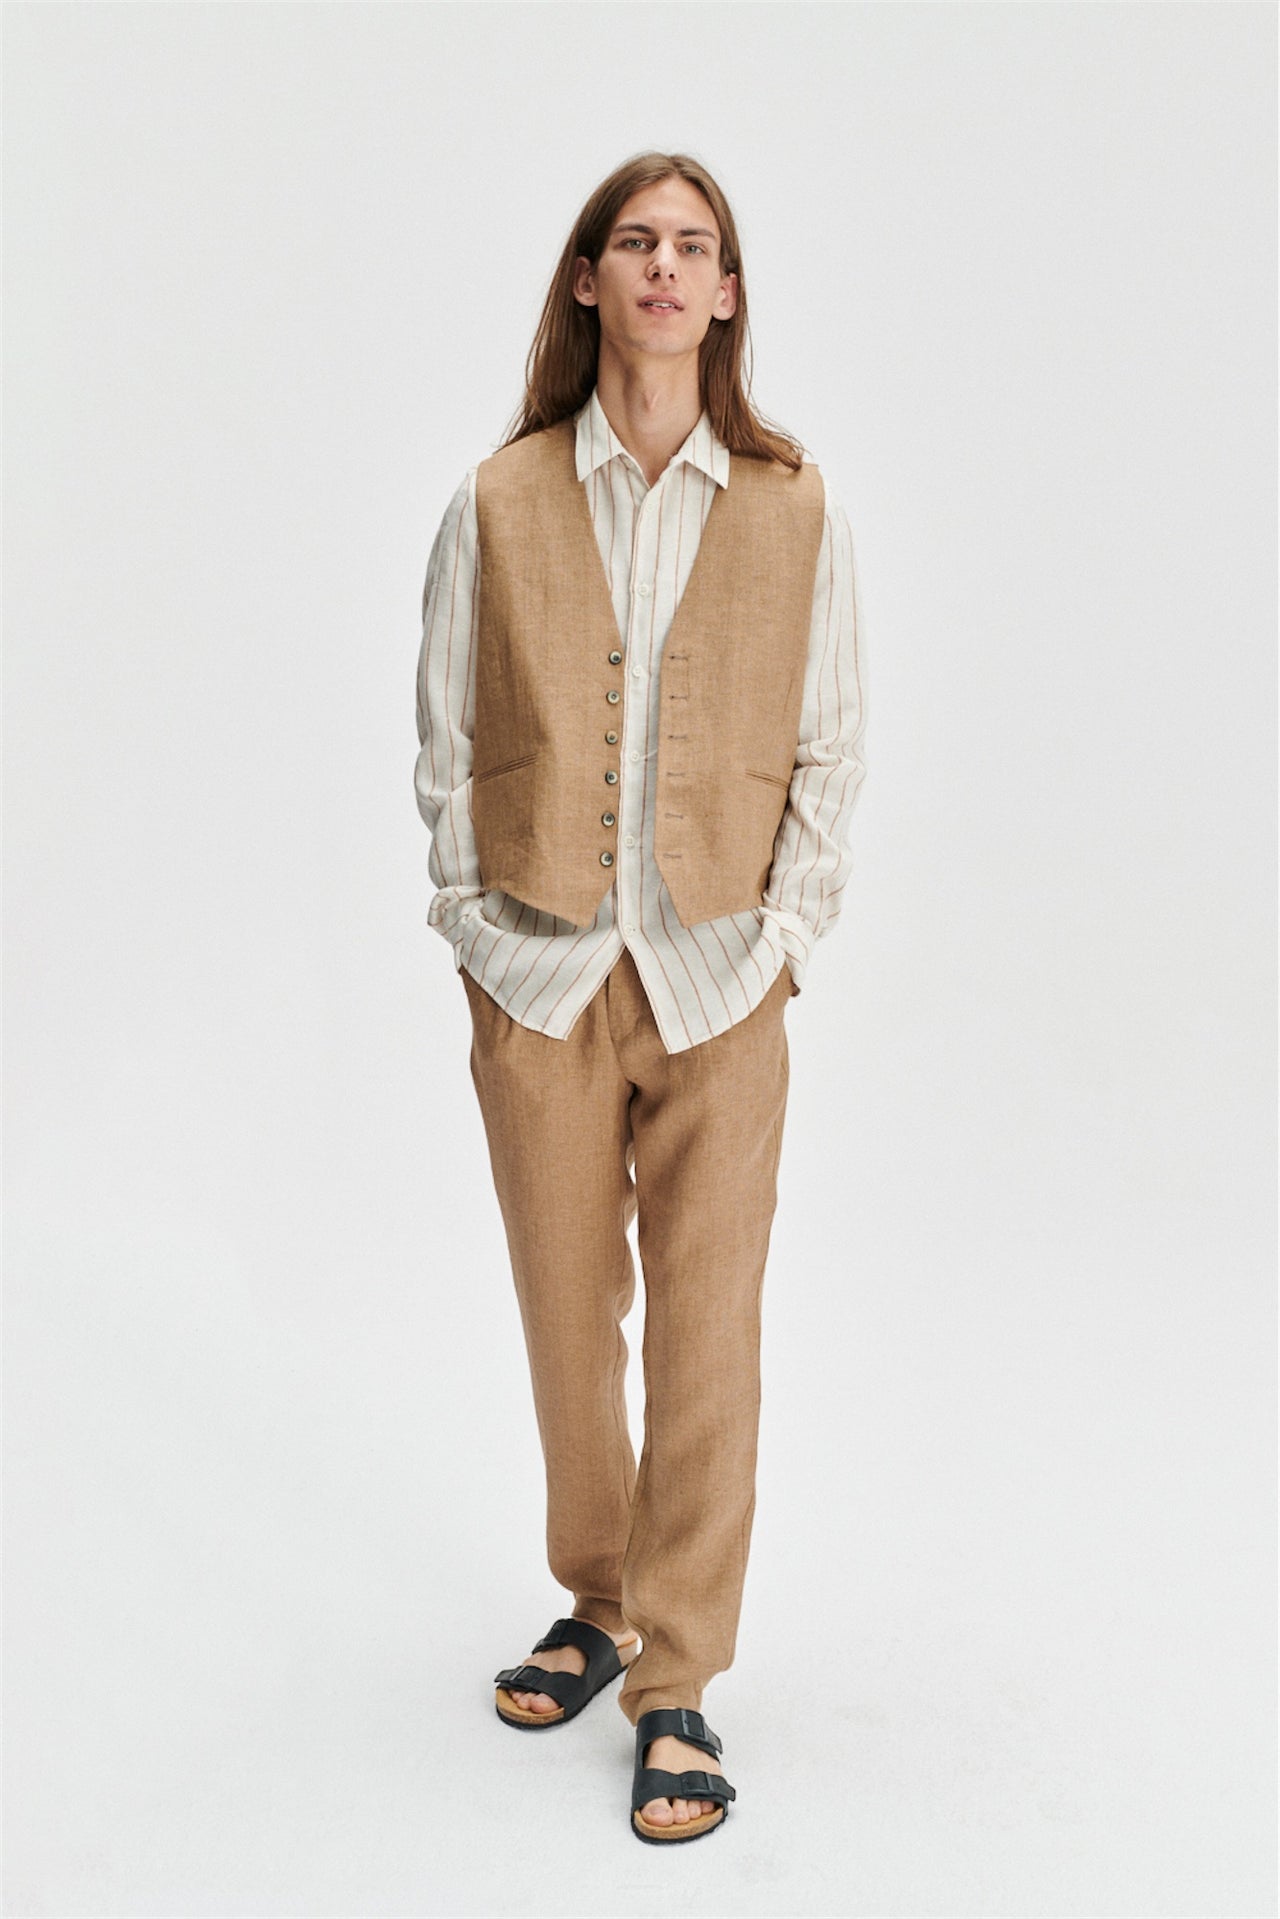 Vest in a Light Brown 100% Traceable Italian Linen by Albini